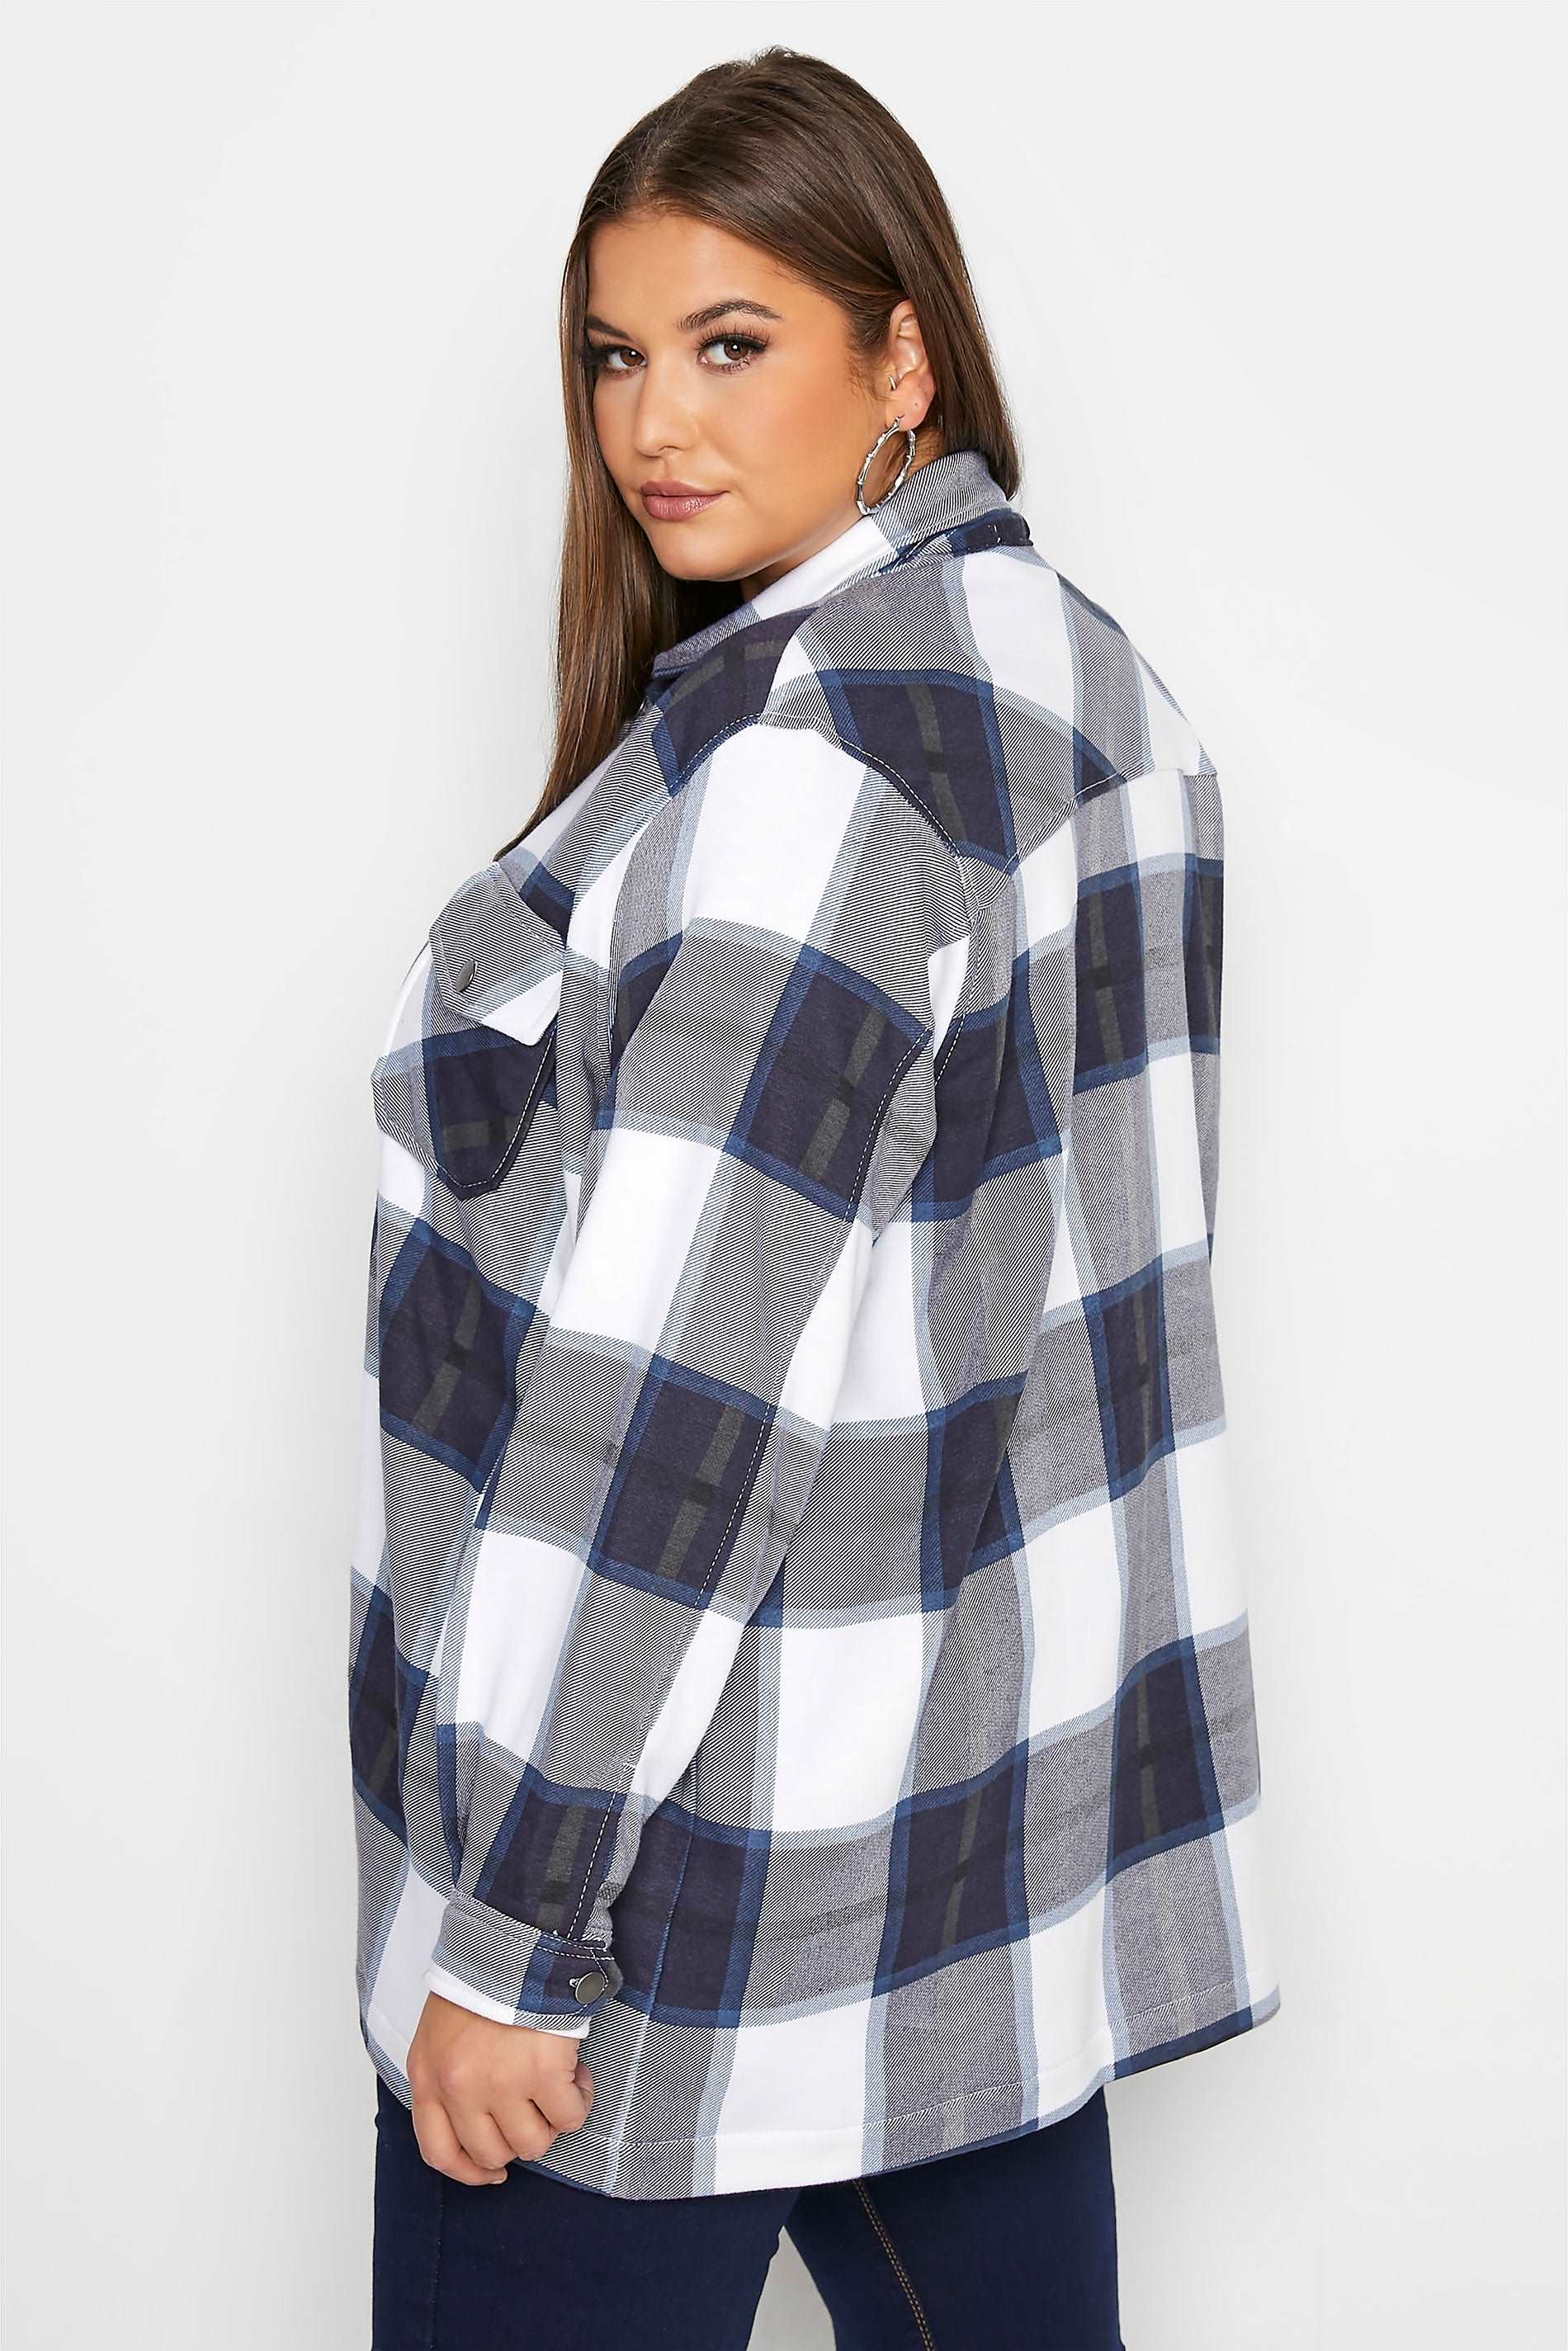 Blue White Oversized check shacket For Her-2015 - FactoryX.pk